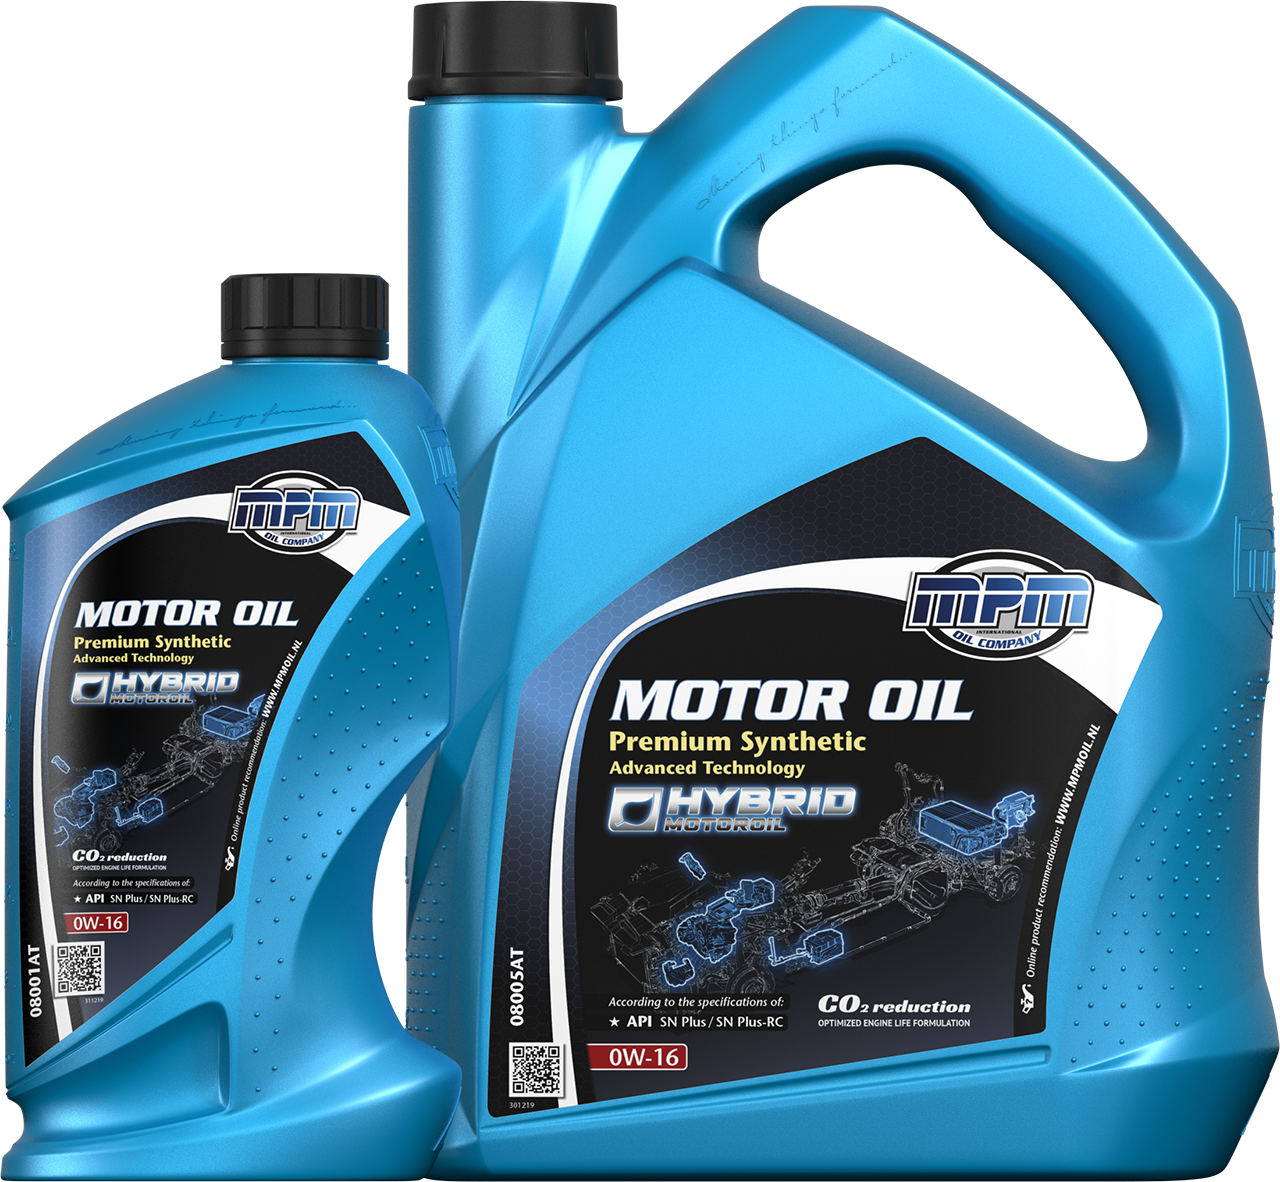 New Mpm at Motor Oil 0w 16 Premium Synthetic Advanced Technology News Mpm Oil